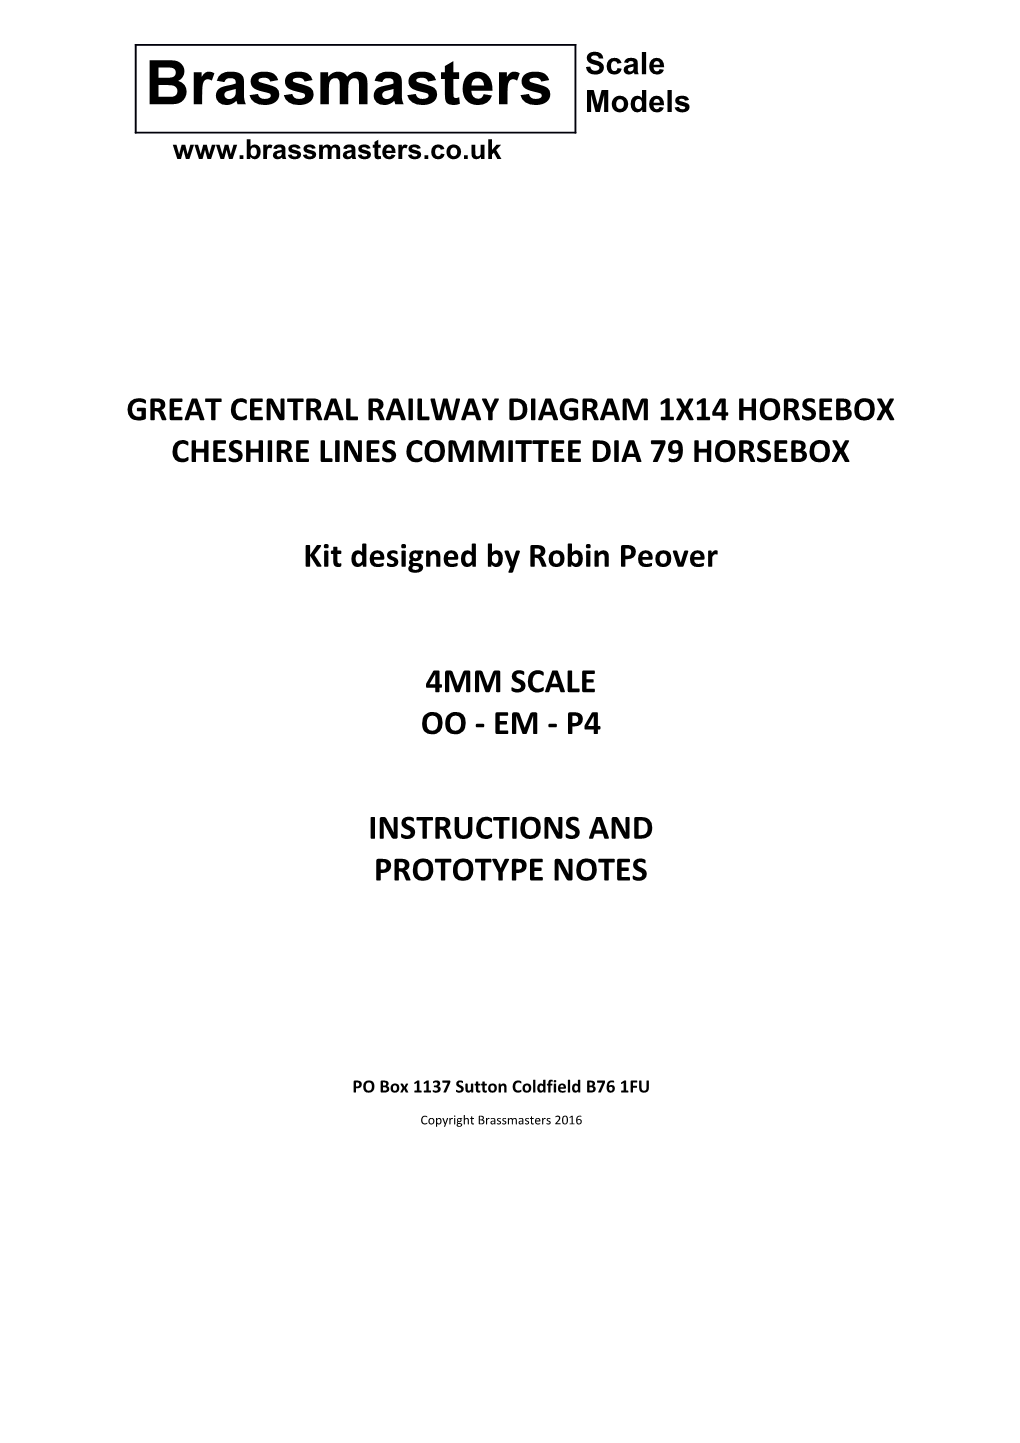 Great Central Railway Diagram 1X14 Horsebox